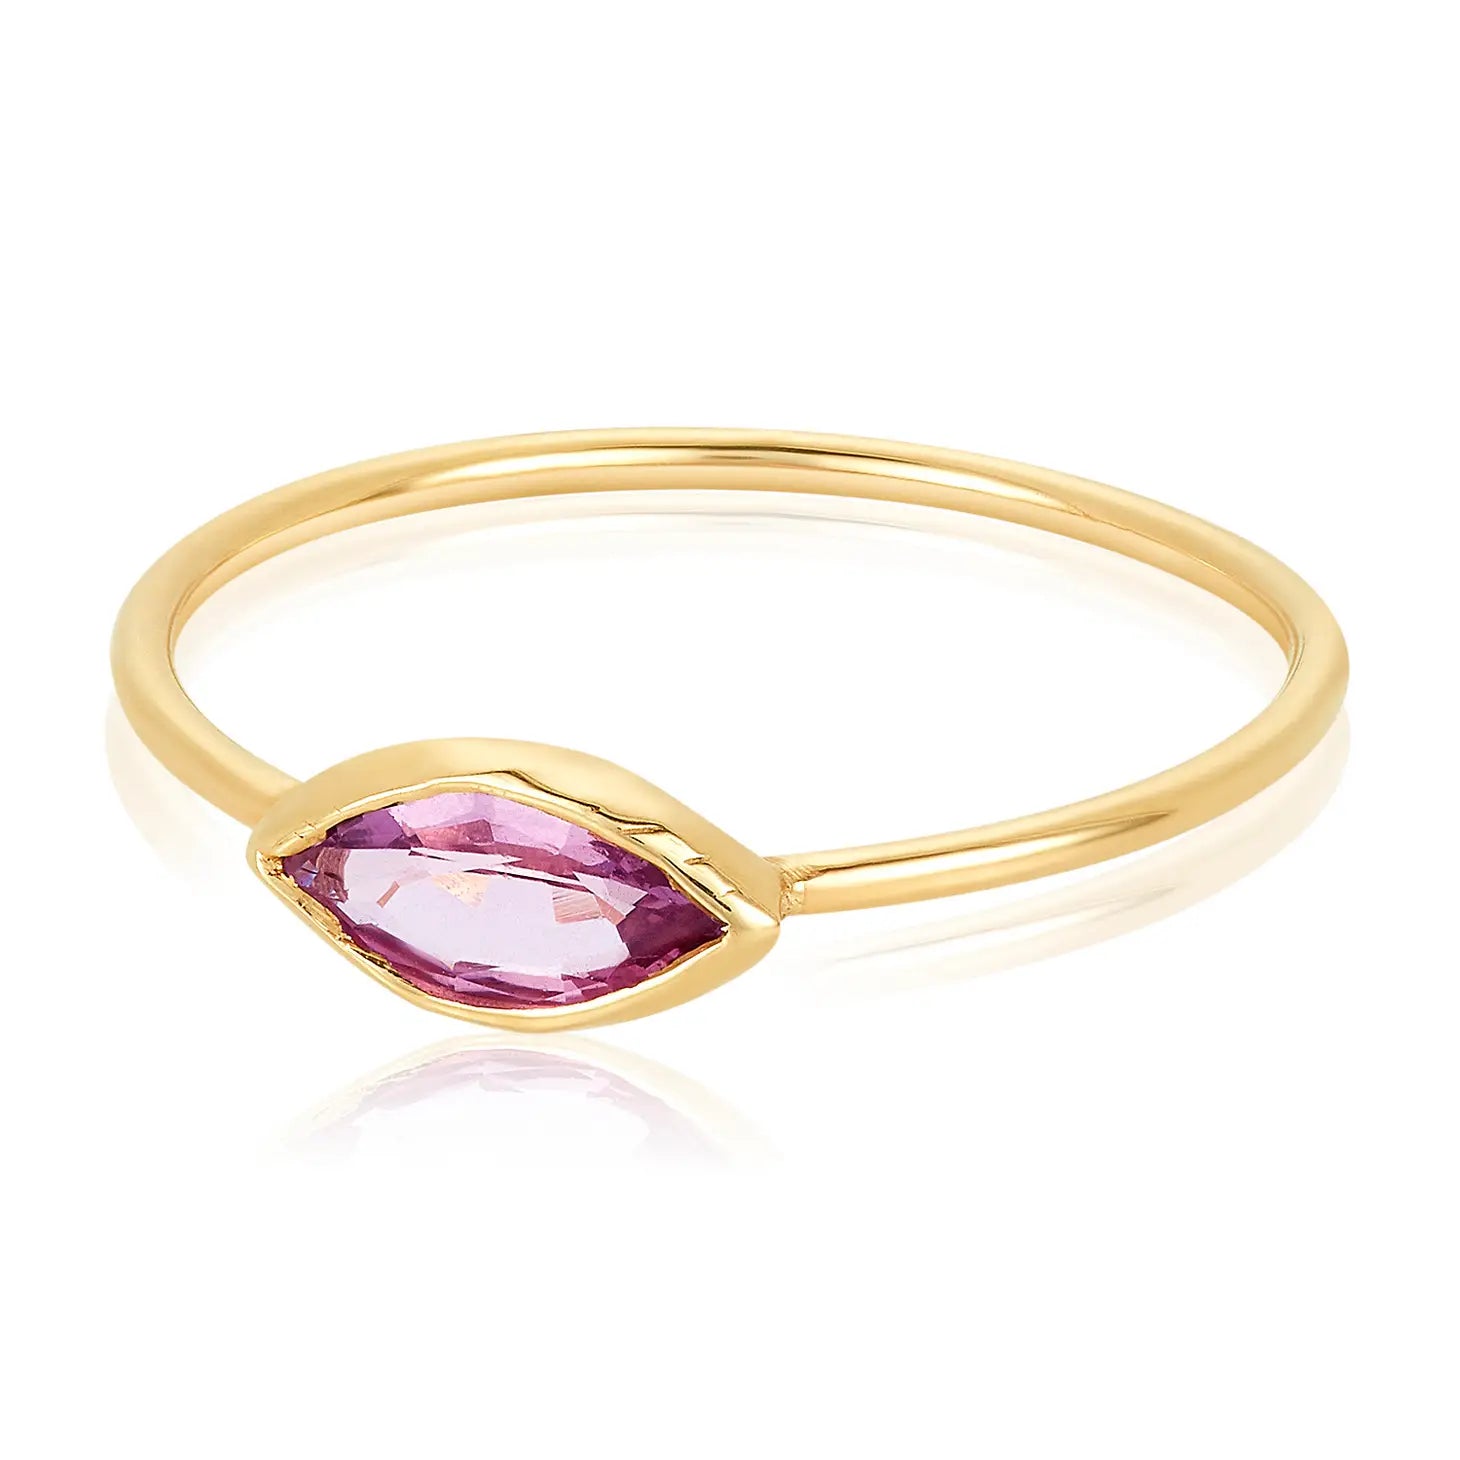 Peekaboo Ring - Pink Sapphire - Size 8